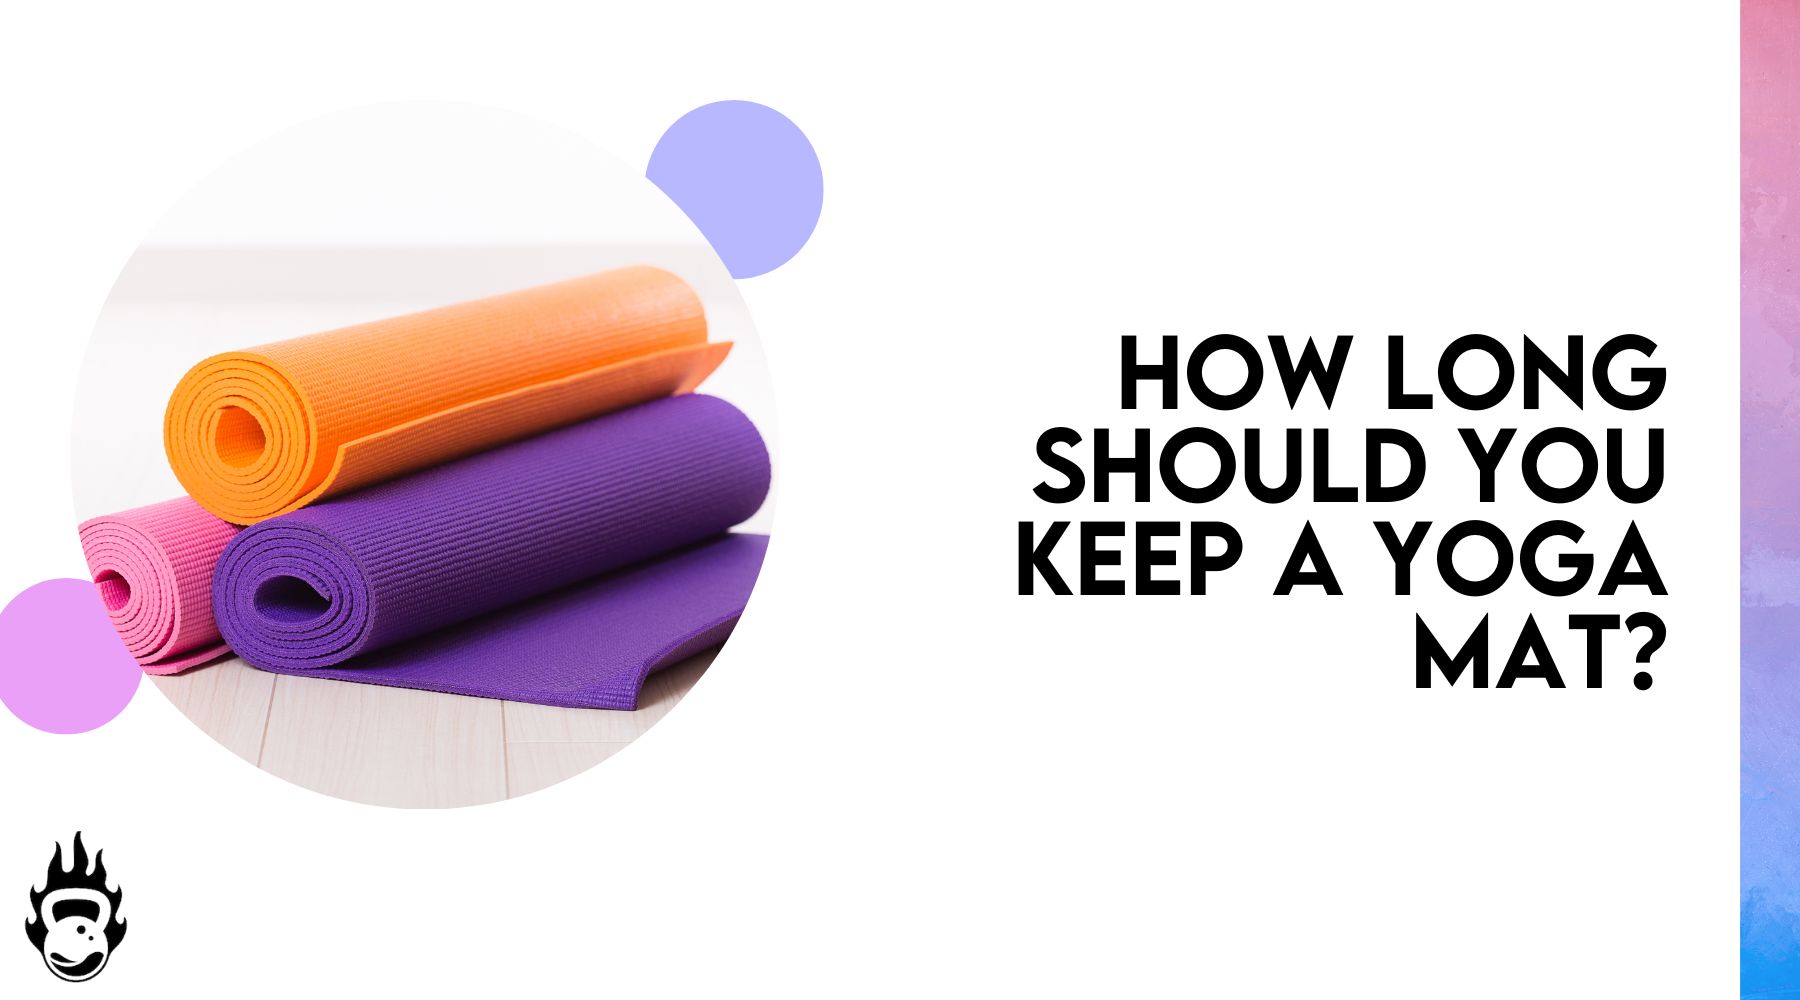 How long should you keep a yoga mat?